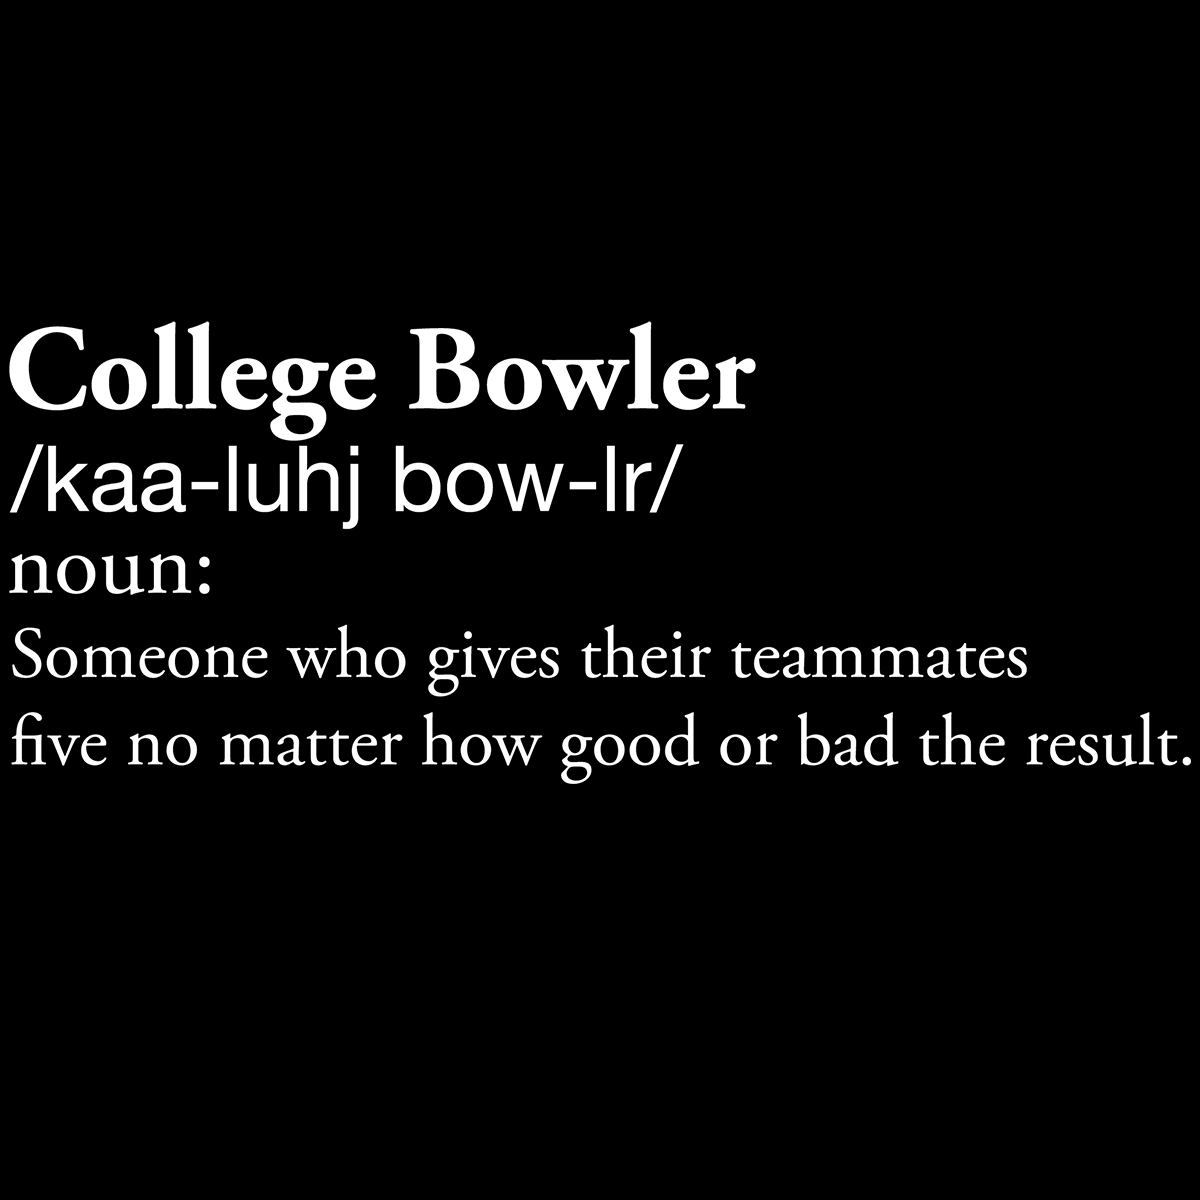 College Bowler